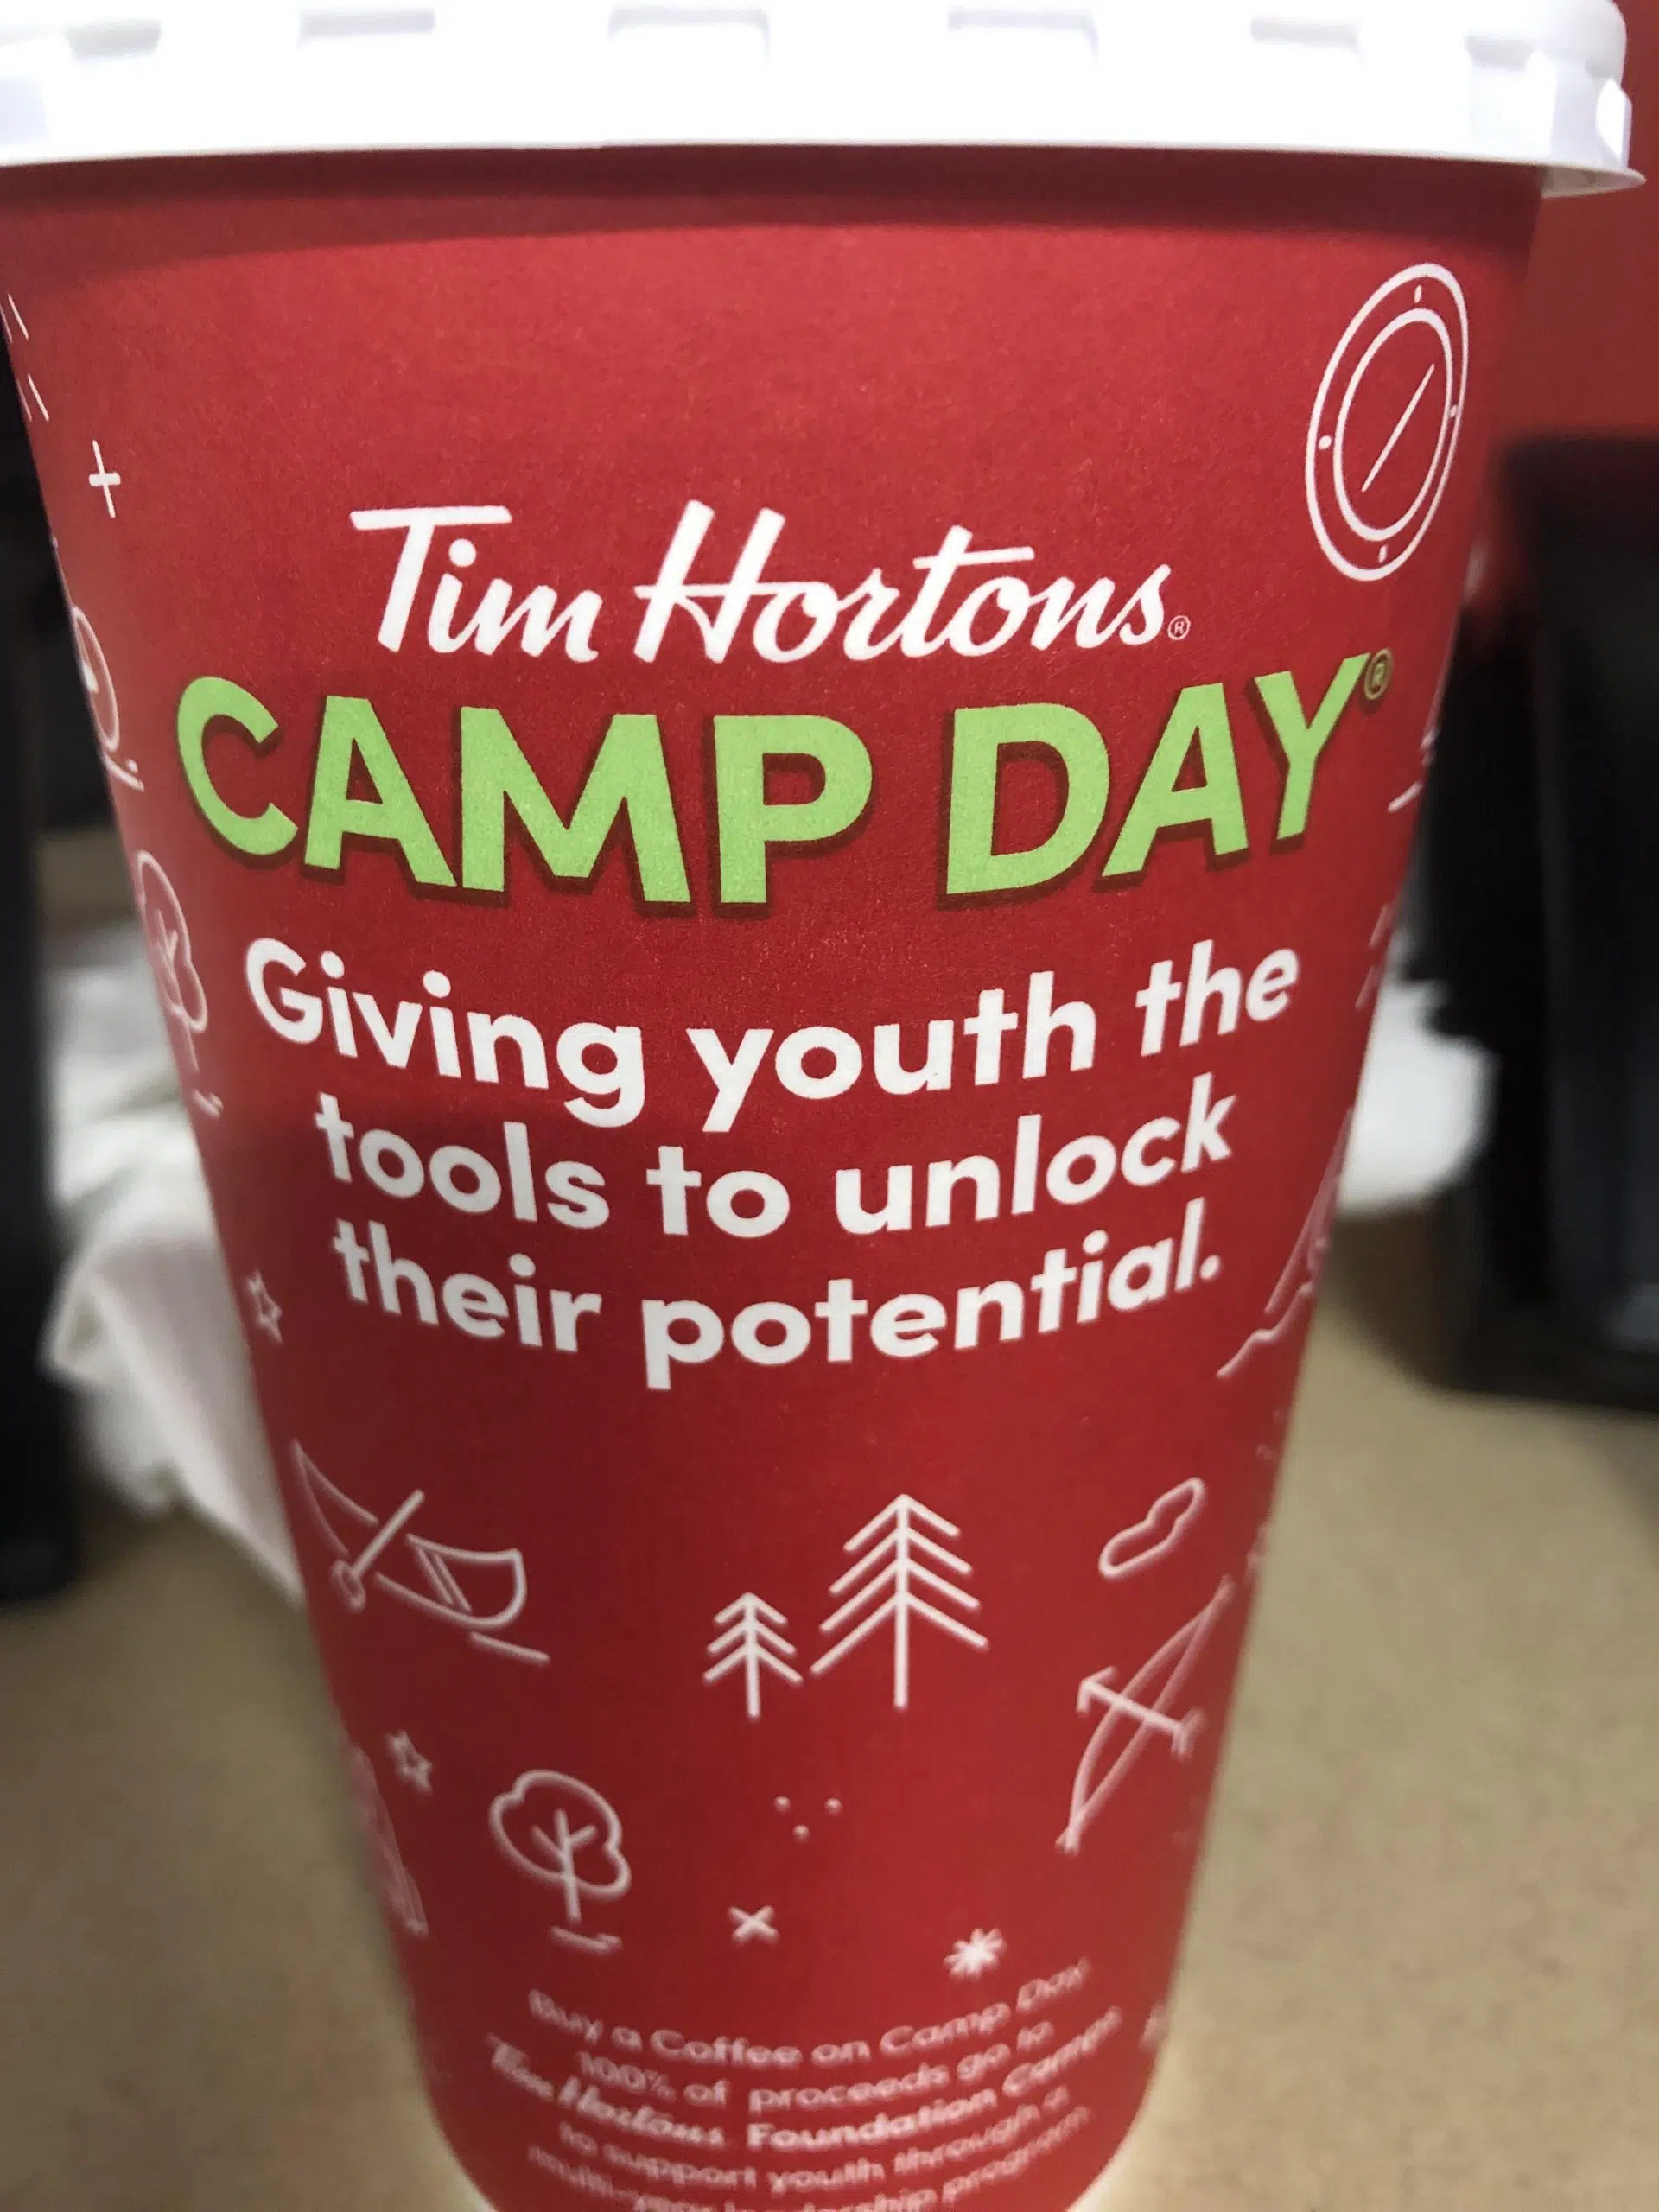 Tim Hortons Camp Day Raises Over $12 Million